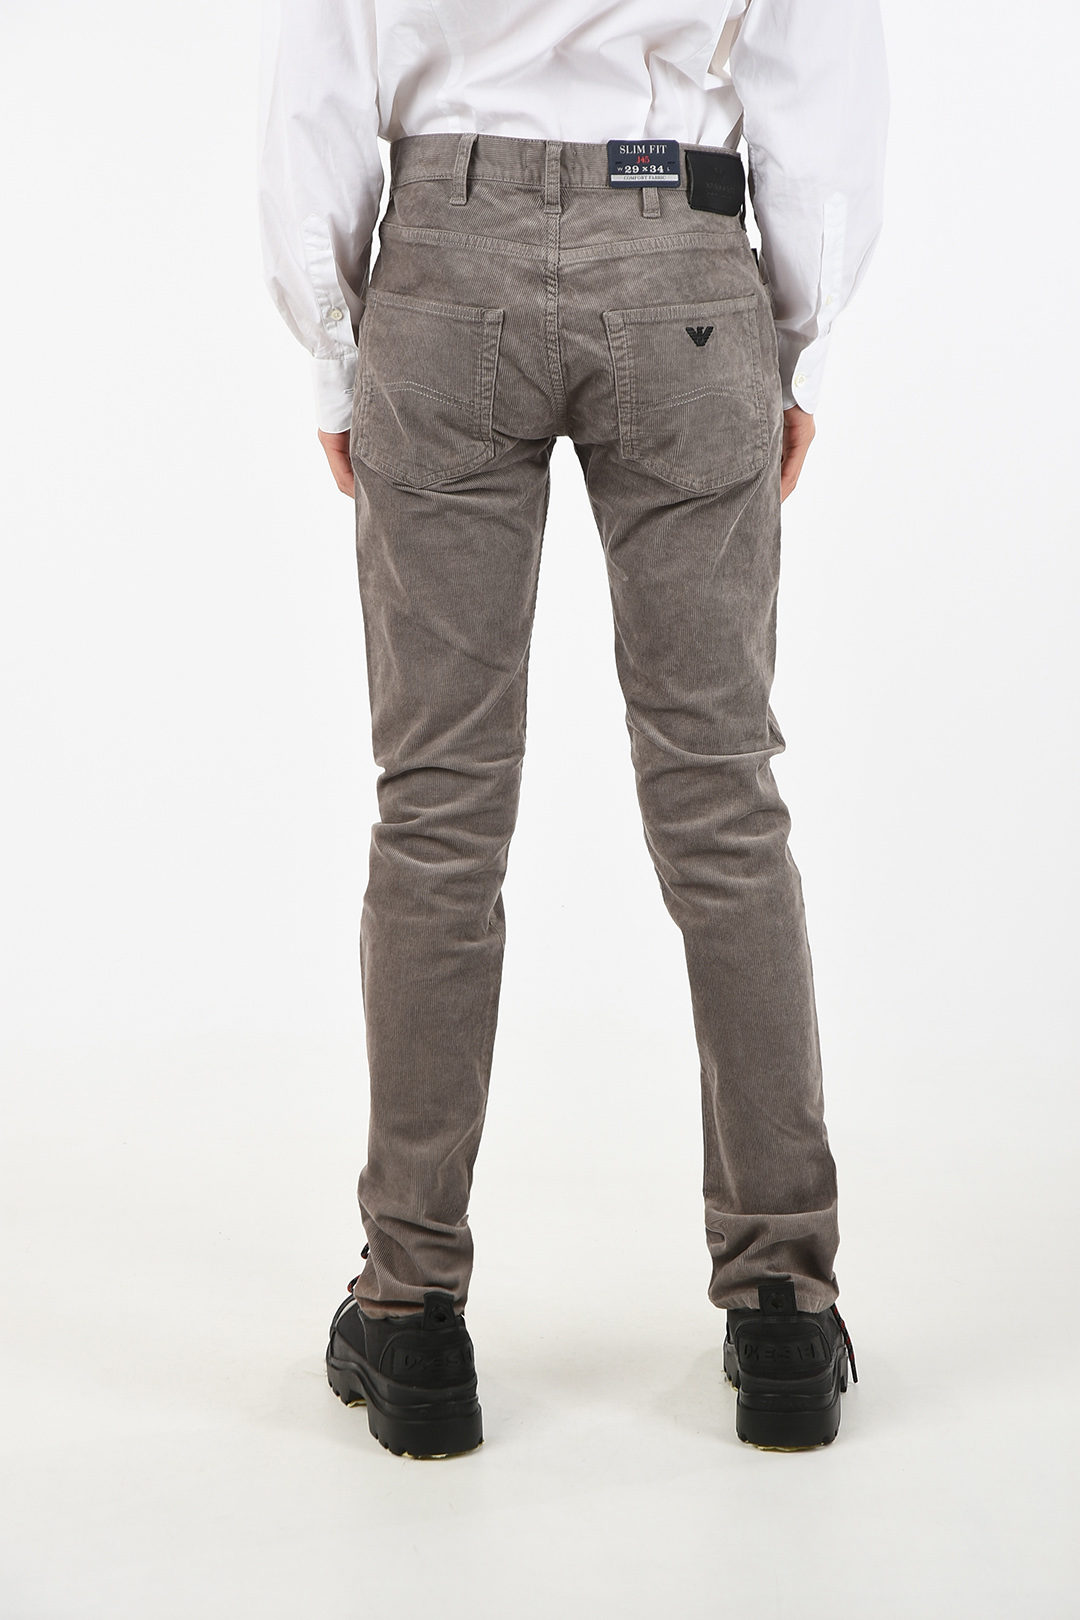 ARMANI JEANS Corduroy Slim Fit 5 Pocket J45 Pants L34 men - Glamood Outlet